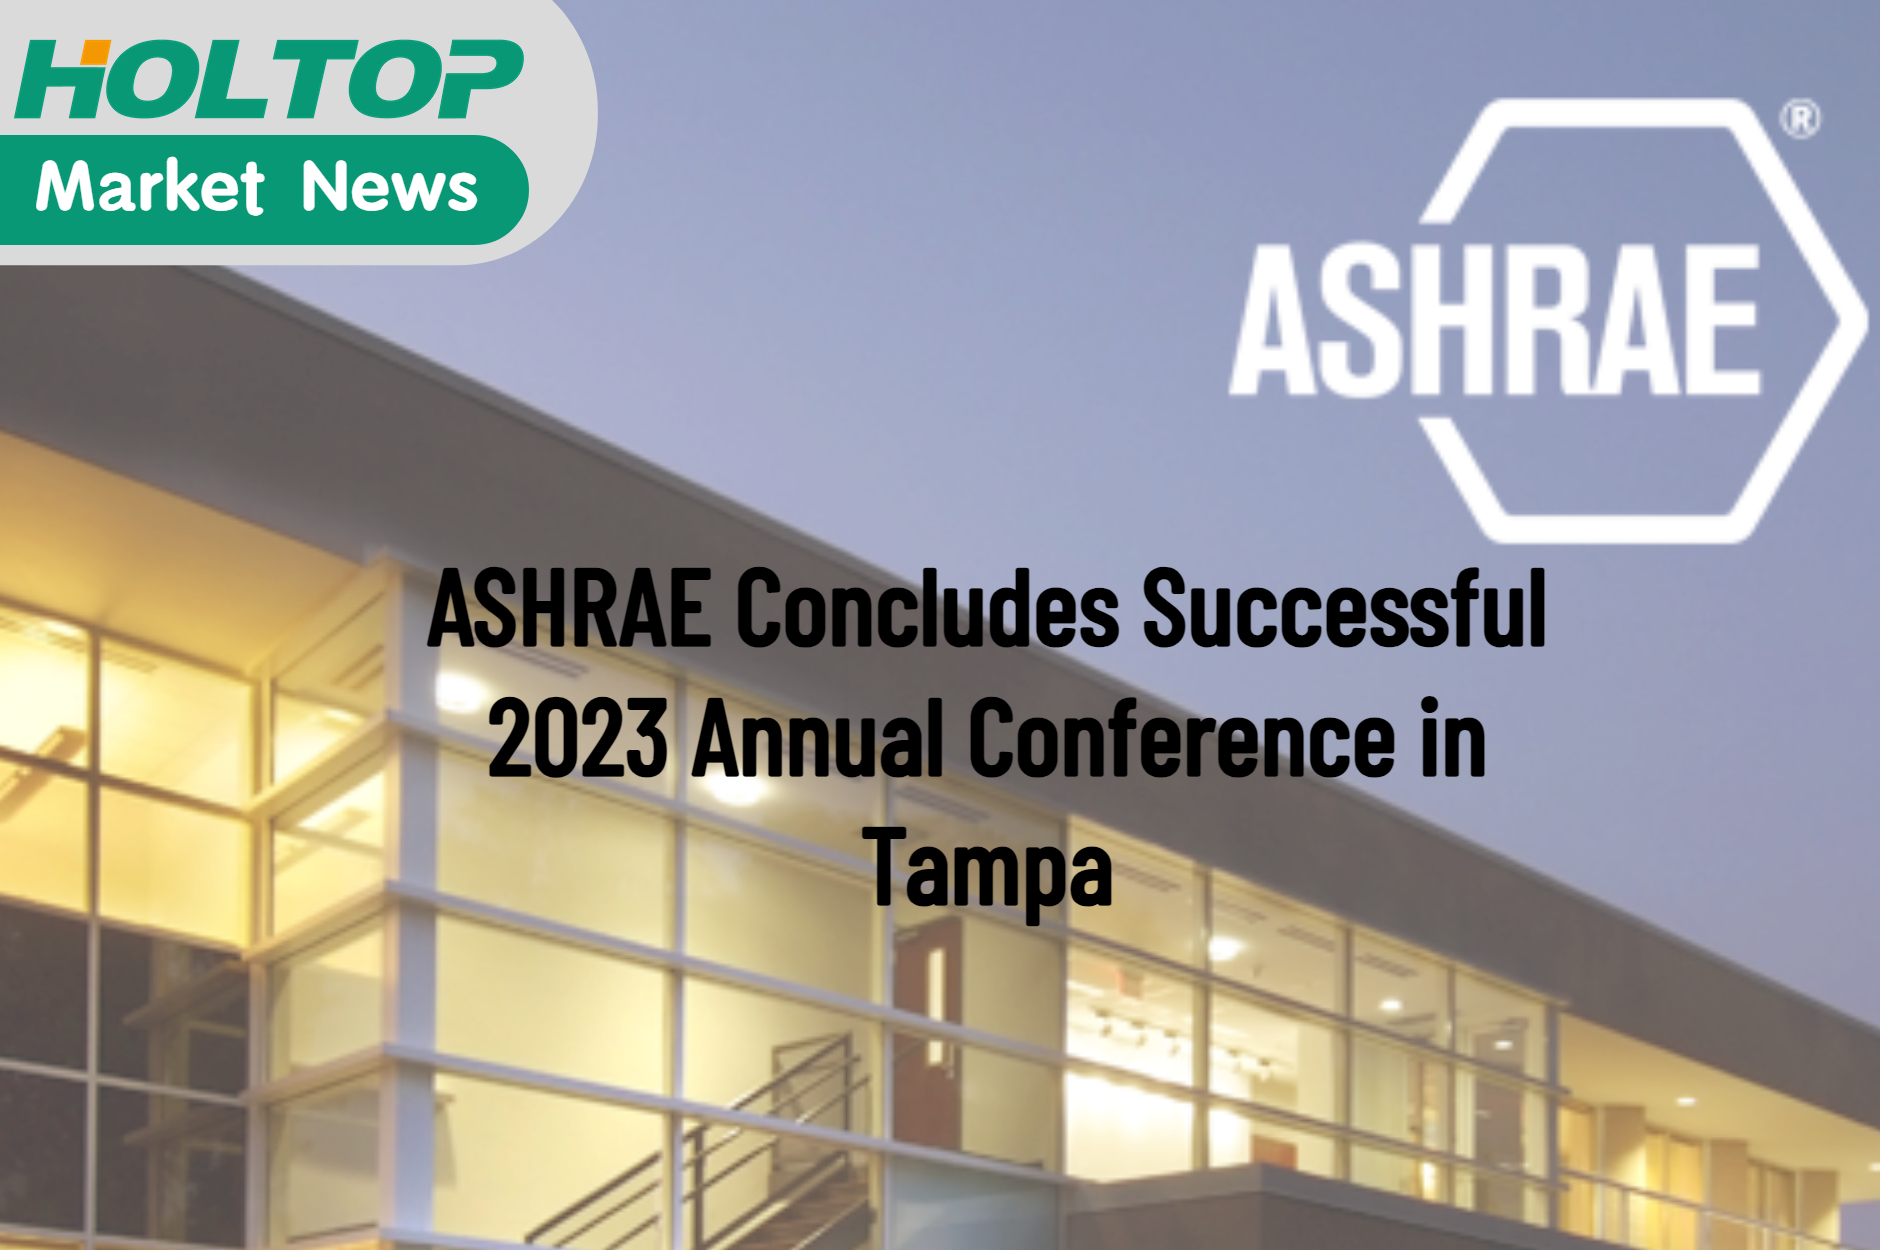 ASHRAE Concludes Successful 2023 Annual Conference in Tampa